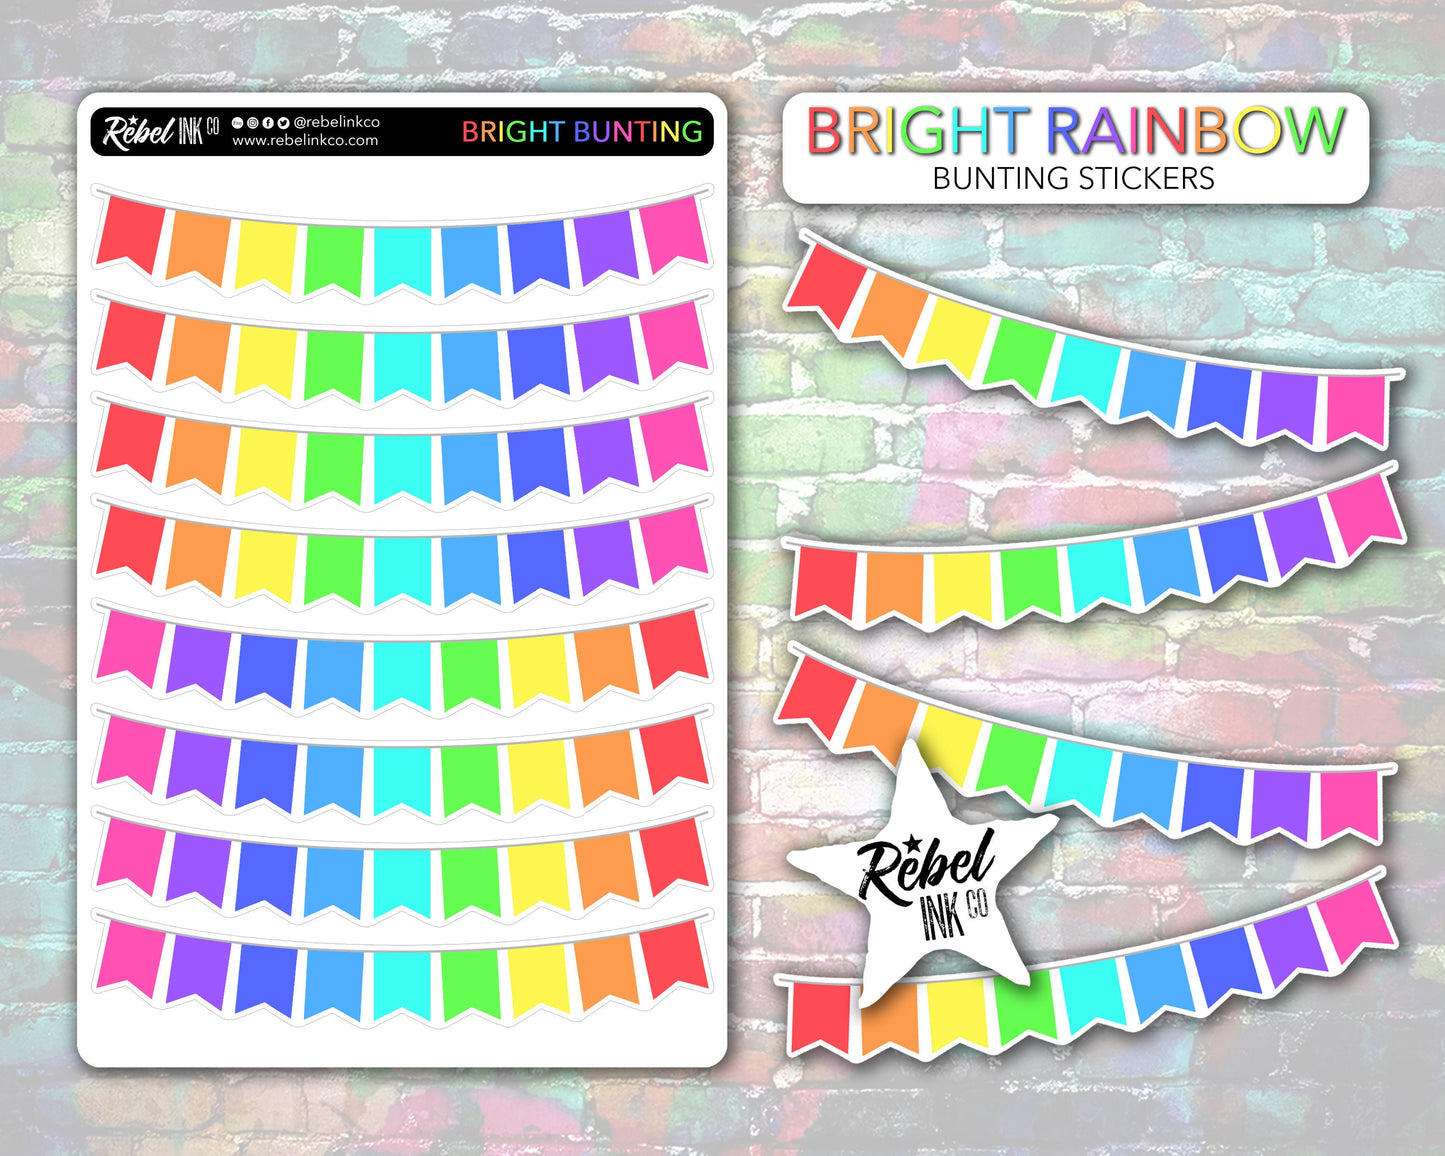 Bunting Stickers - Bright Rainbow